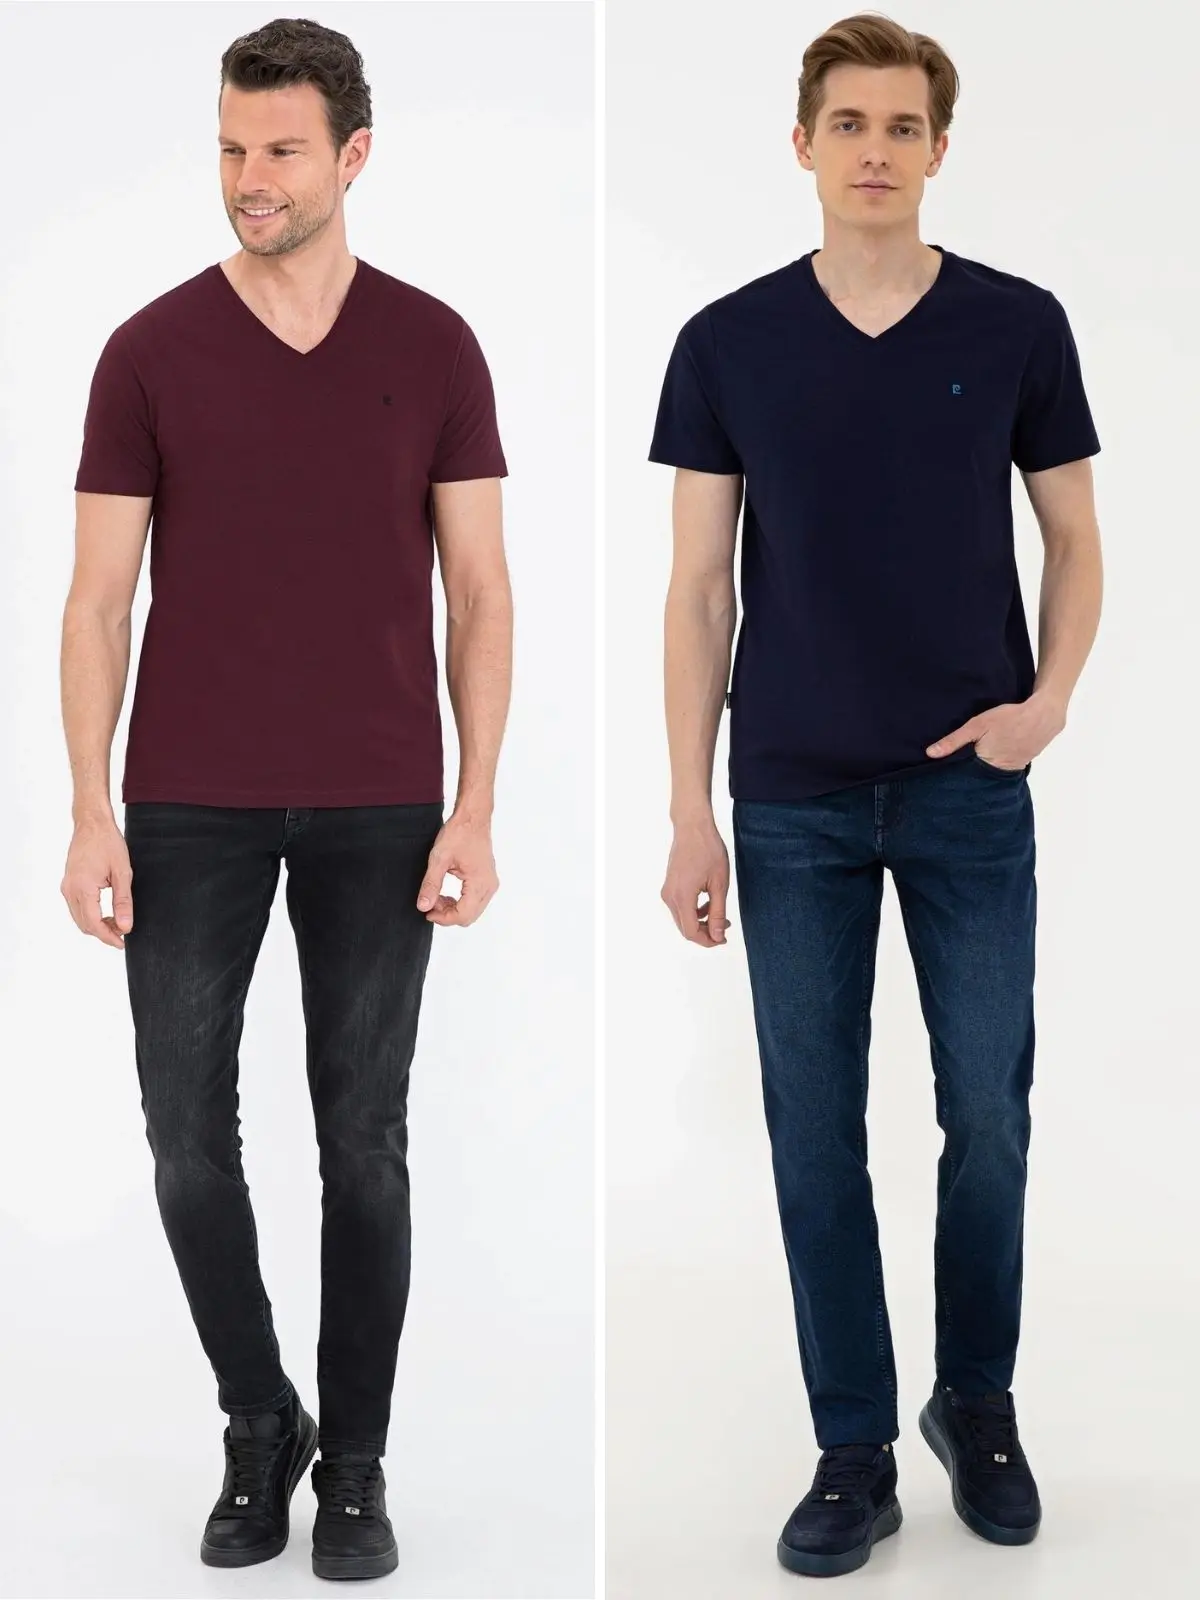 

Pierre Cardin V-Neck Slim Fit Basic T-Shirt, 100% Cotton Solid Color No Pocket Tops Short Sleeves Casual Summer